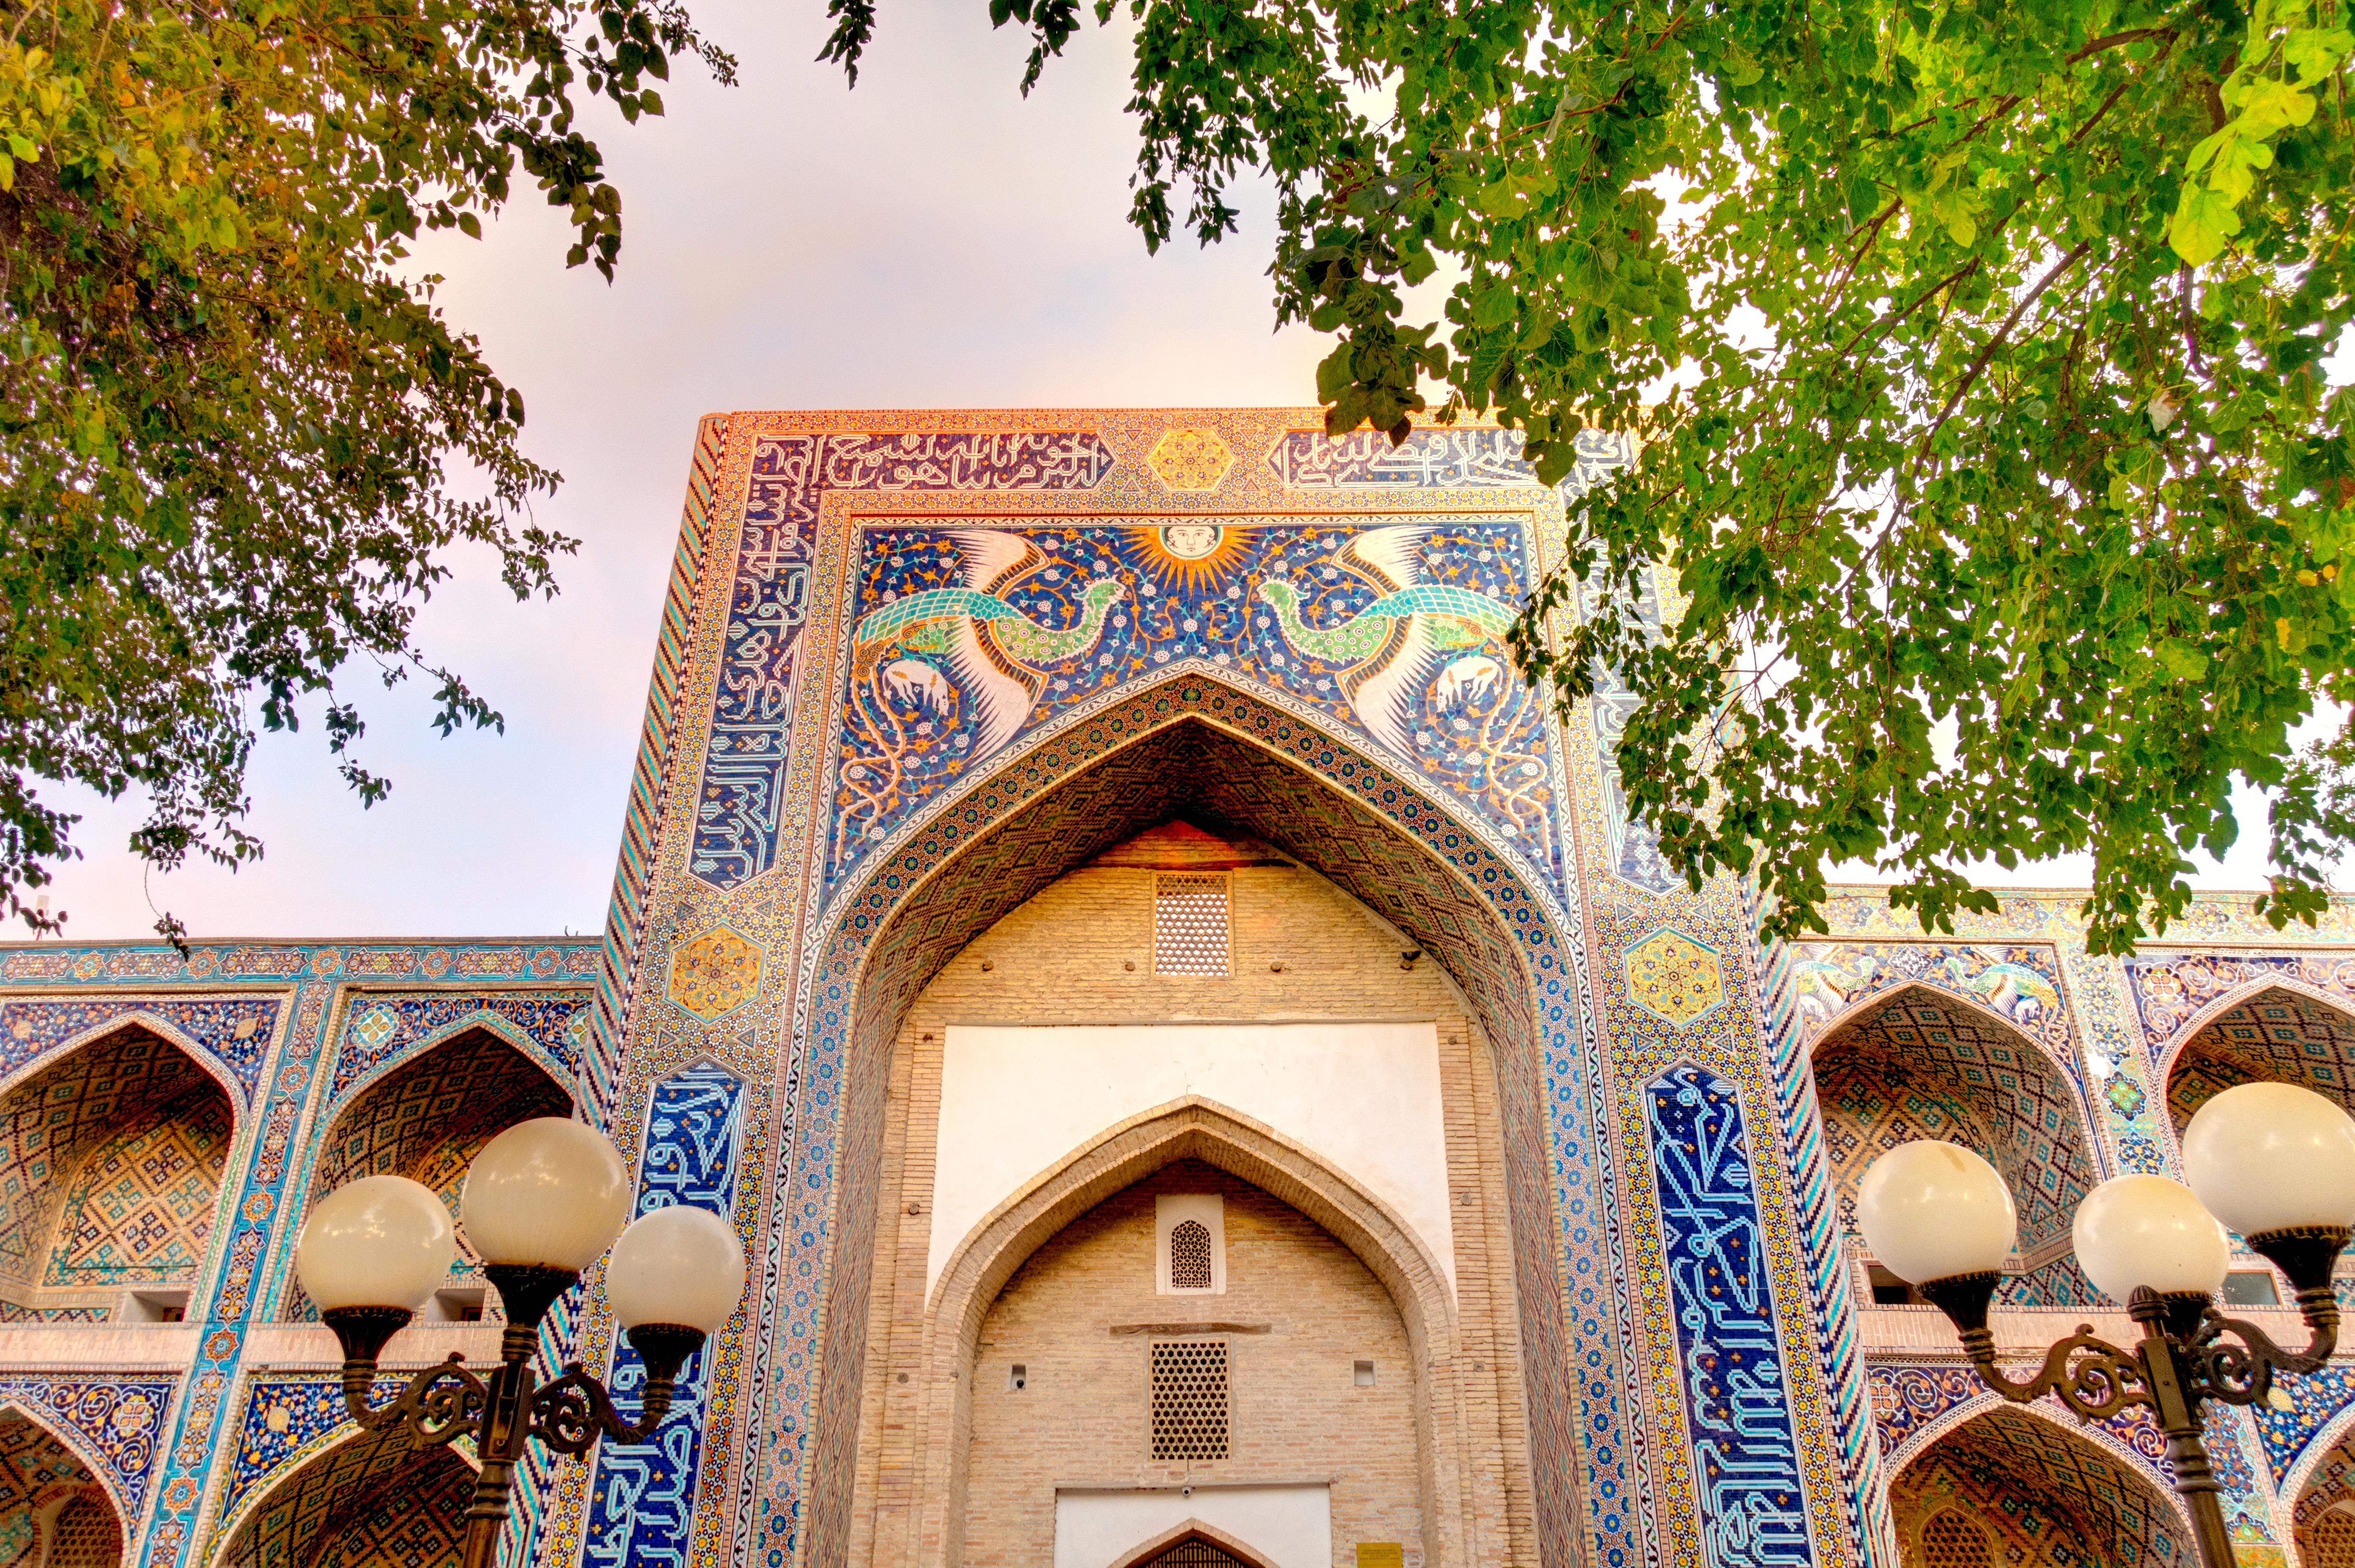 Divanbegi Madrasah- Photo by mehdi33300 / Shutterstock.com